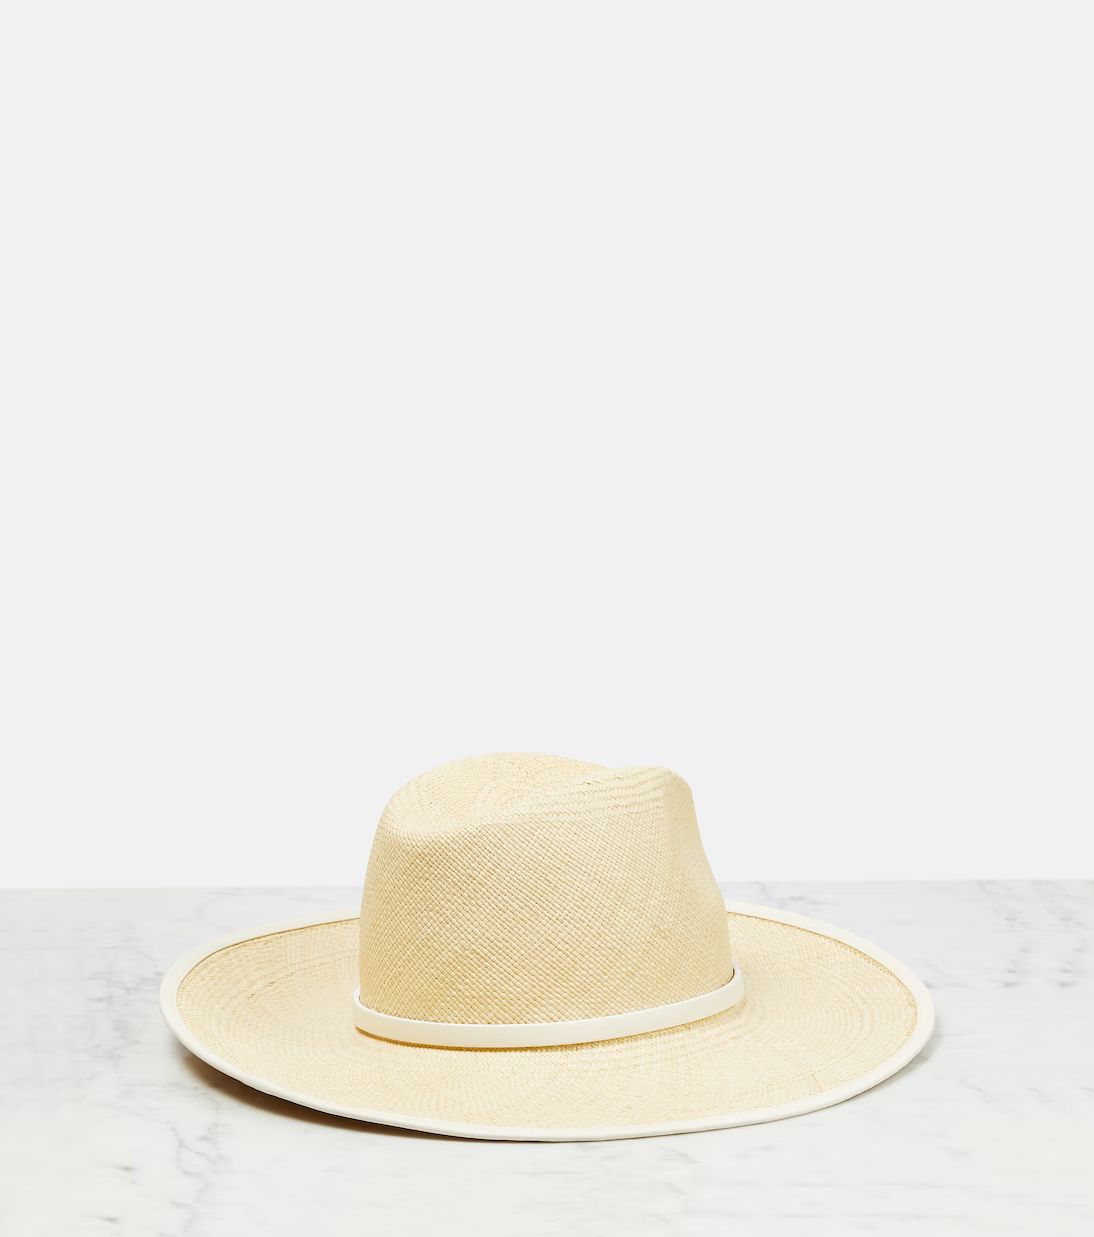 VLogo leather-trimmed straw hat | Mytheresa (UK)